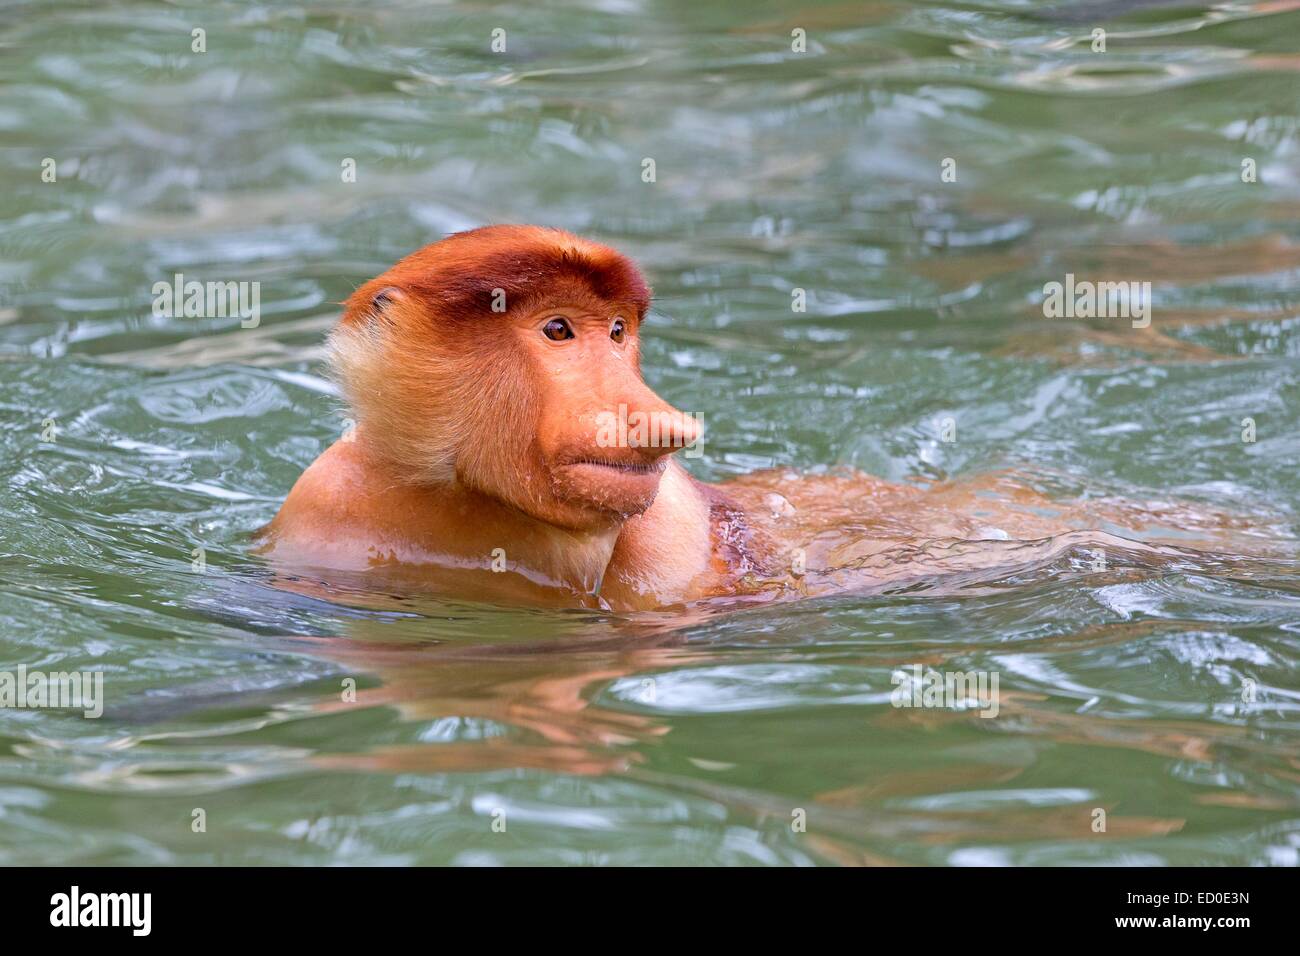 Malaysia, Sabah state, Labuk Bay, Proboscis monkey or long-nosed monkey (Nasalis larvatus), swimming Stock Photo